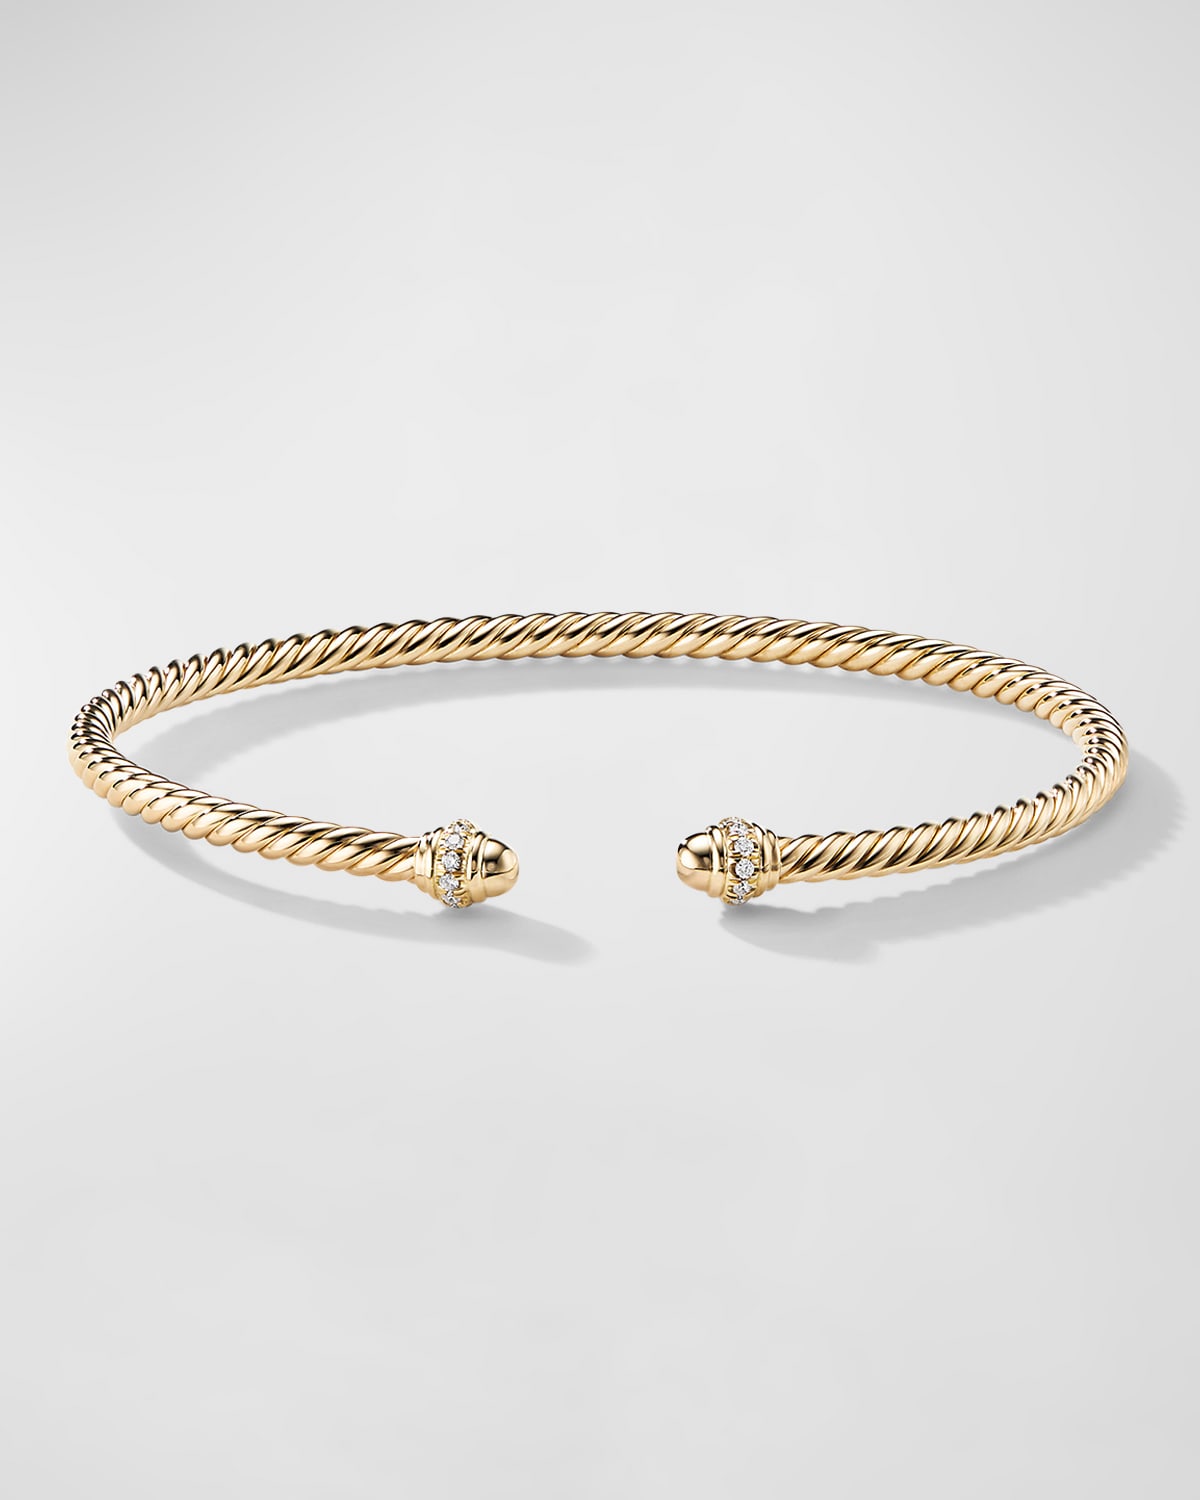 18k Gold Petite CableSpira Bracelet w/ Diamonds, Size M